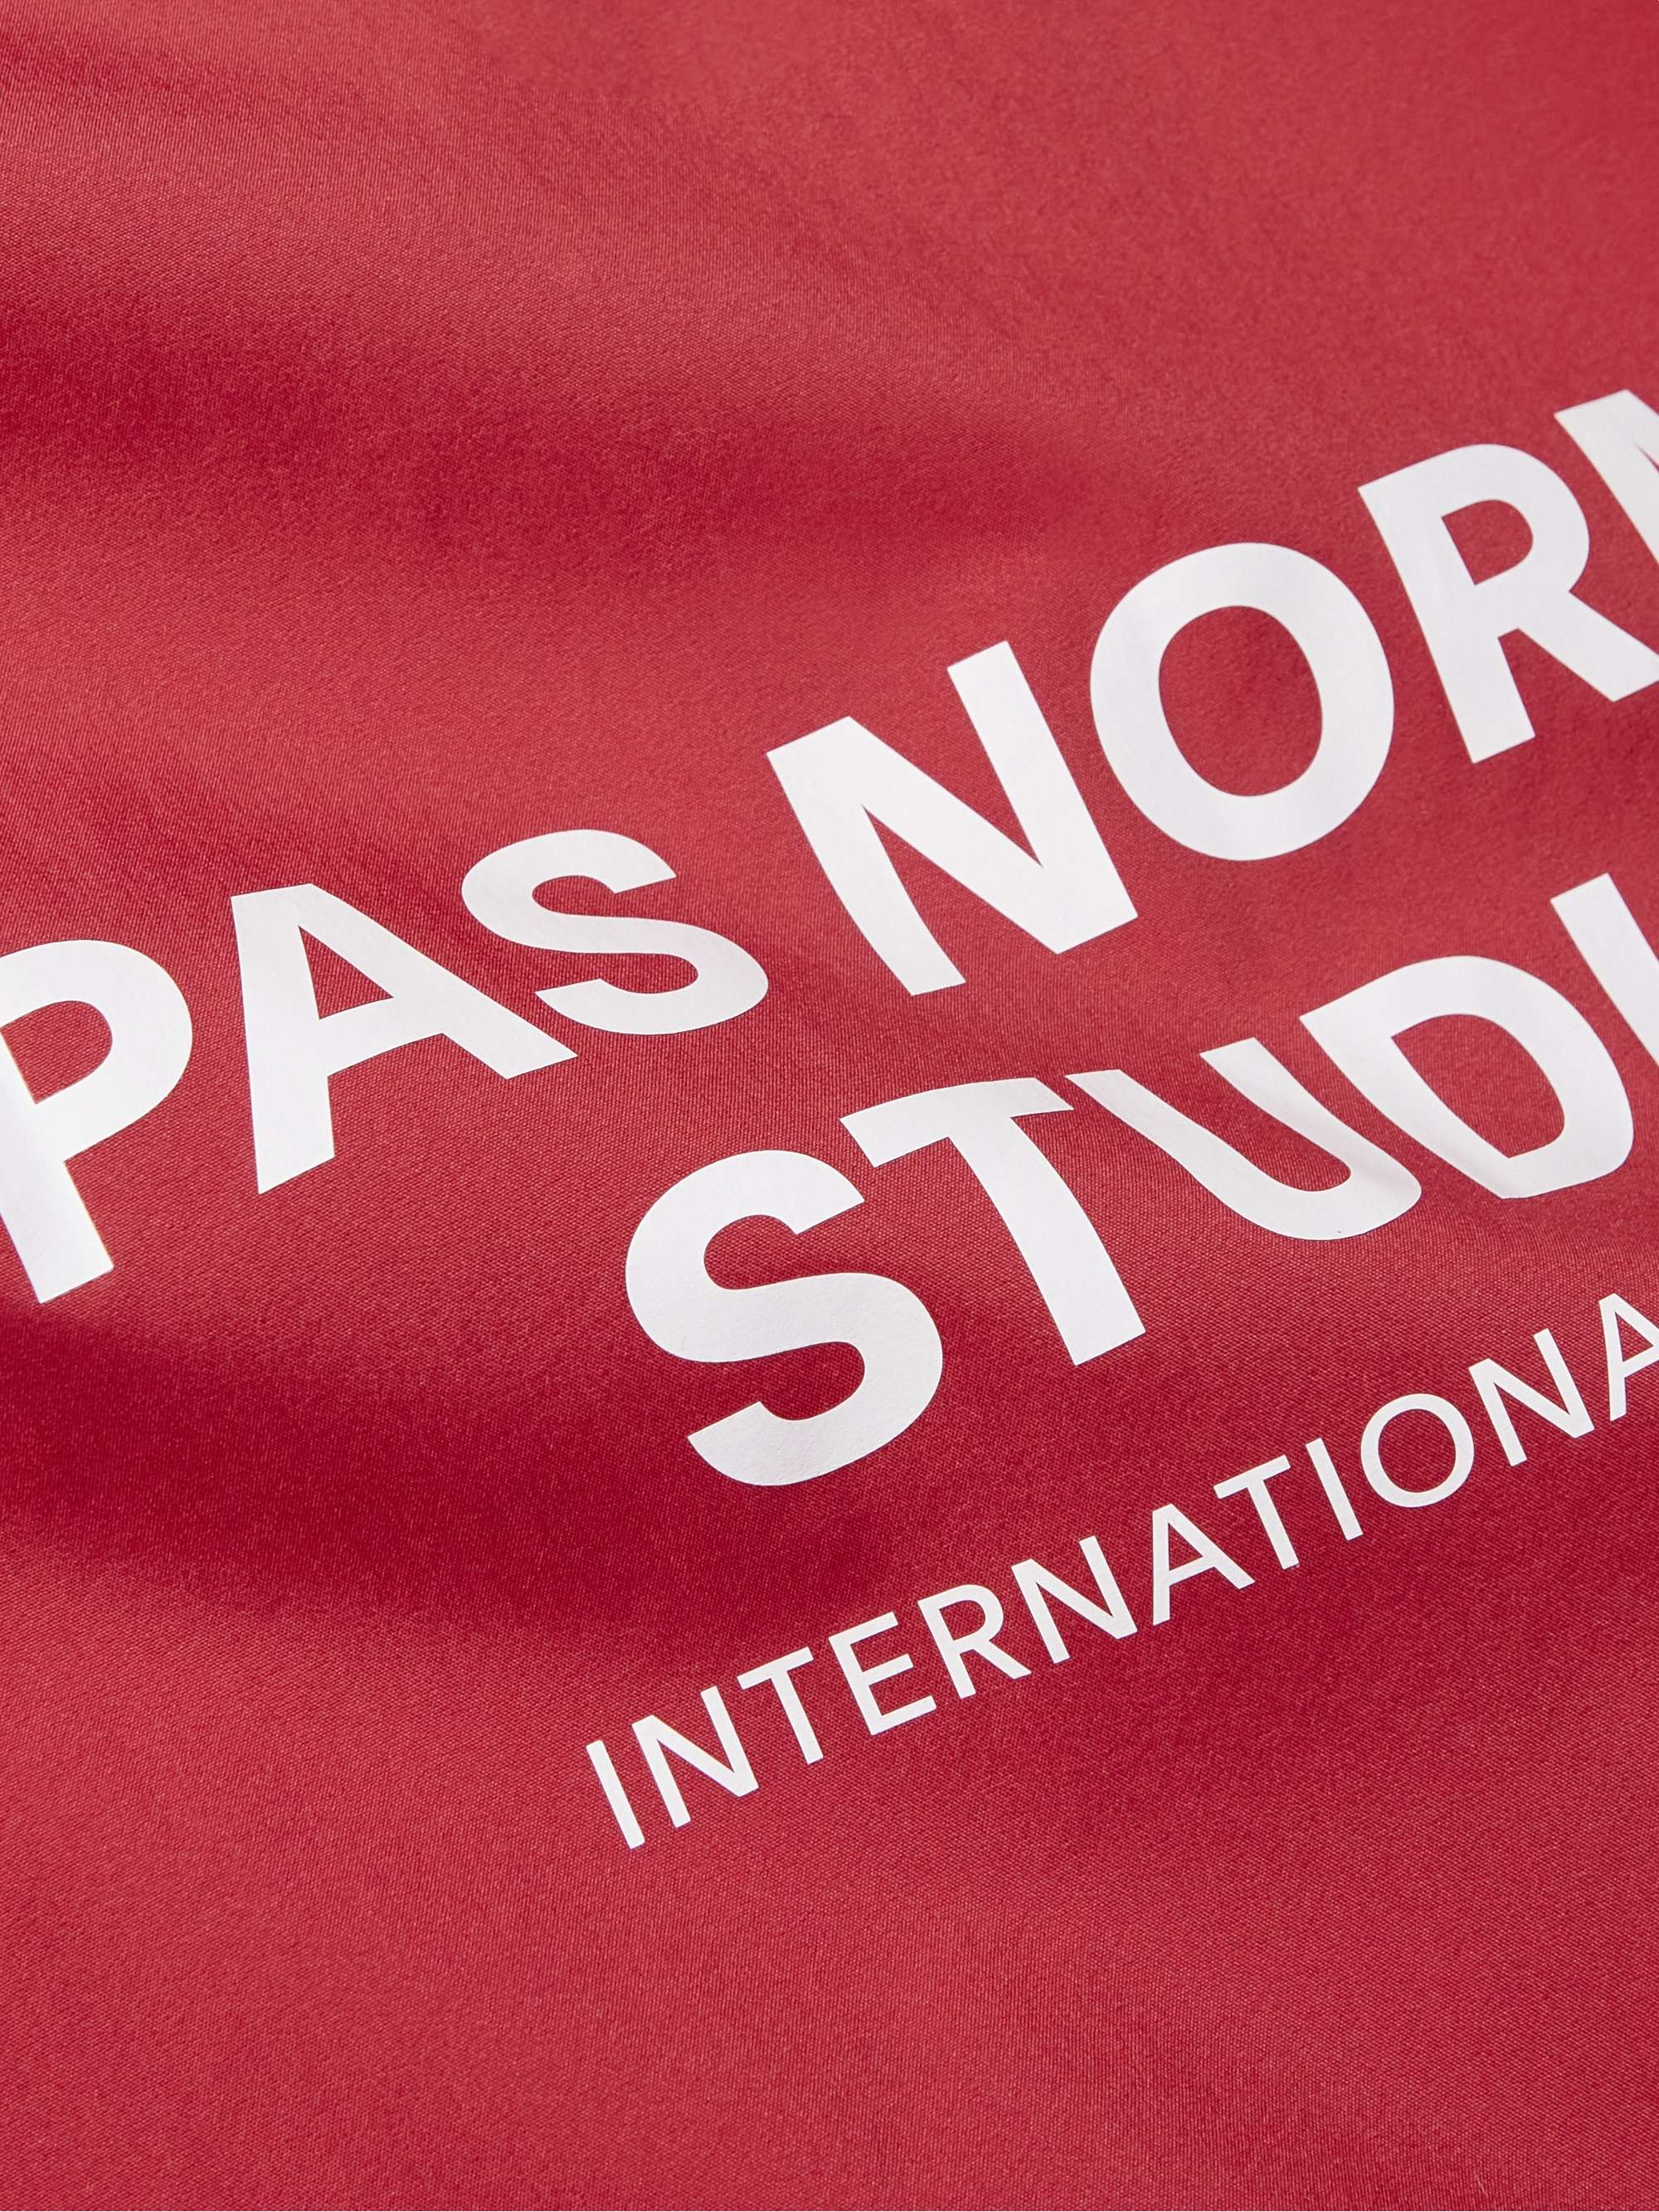 PAS NORMAL STUDIOS Stow Away Logo-Print Nylon Cycling Jacket